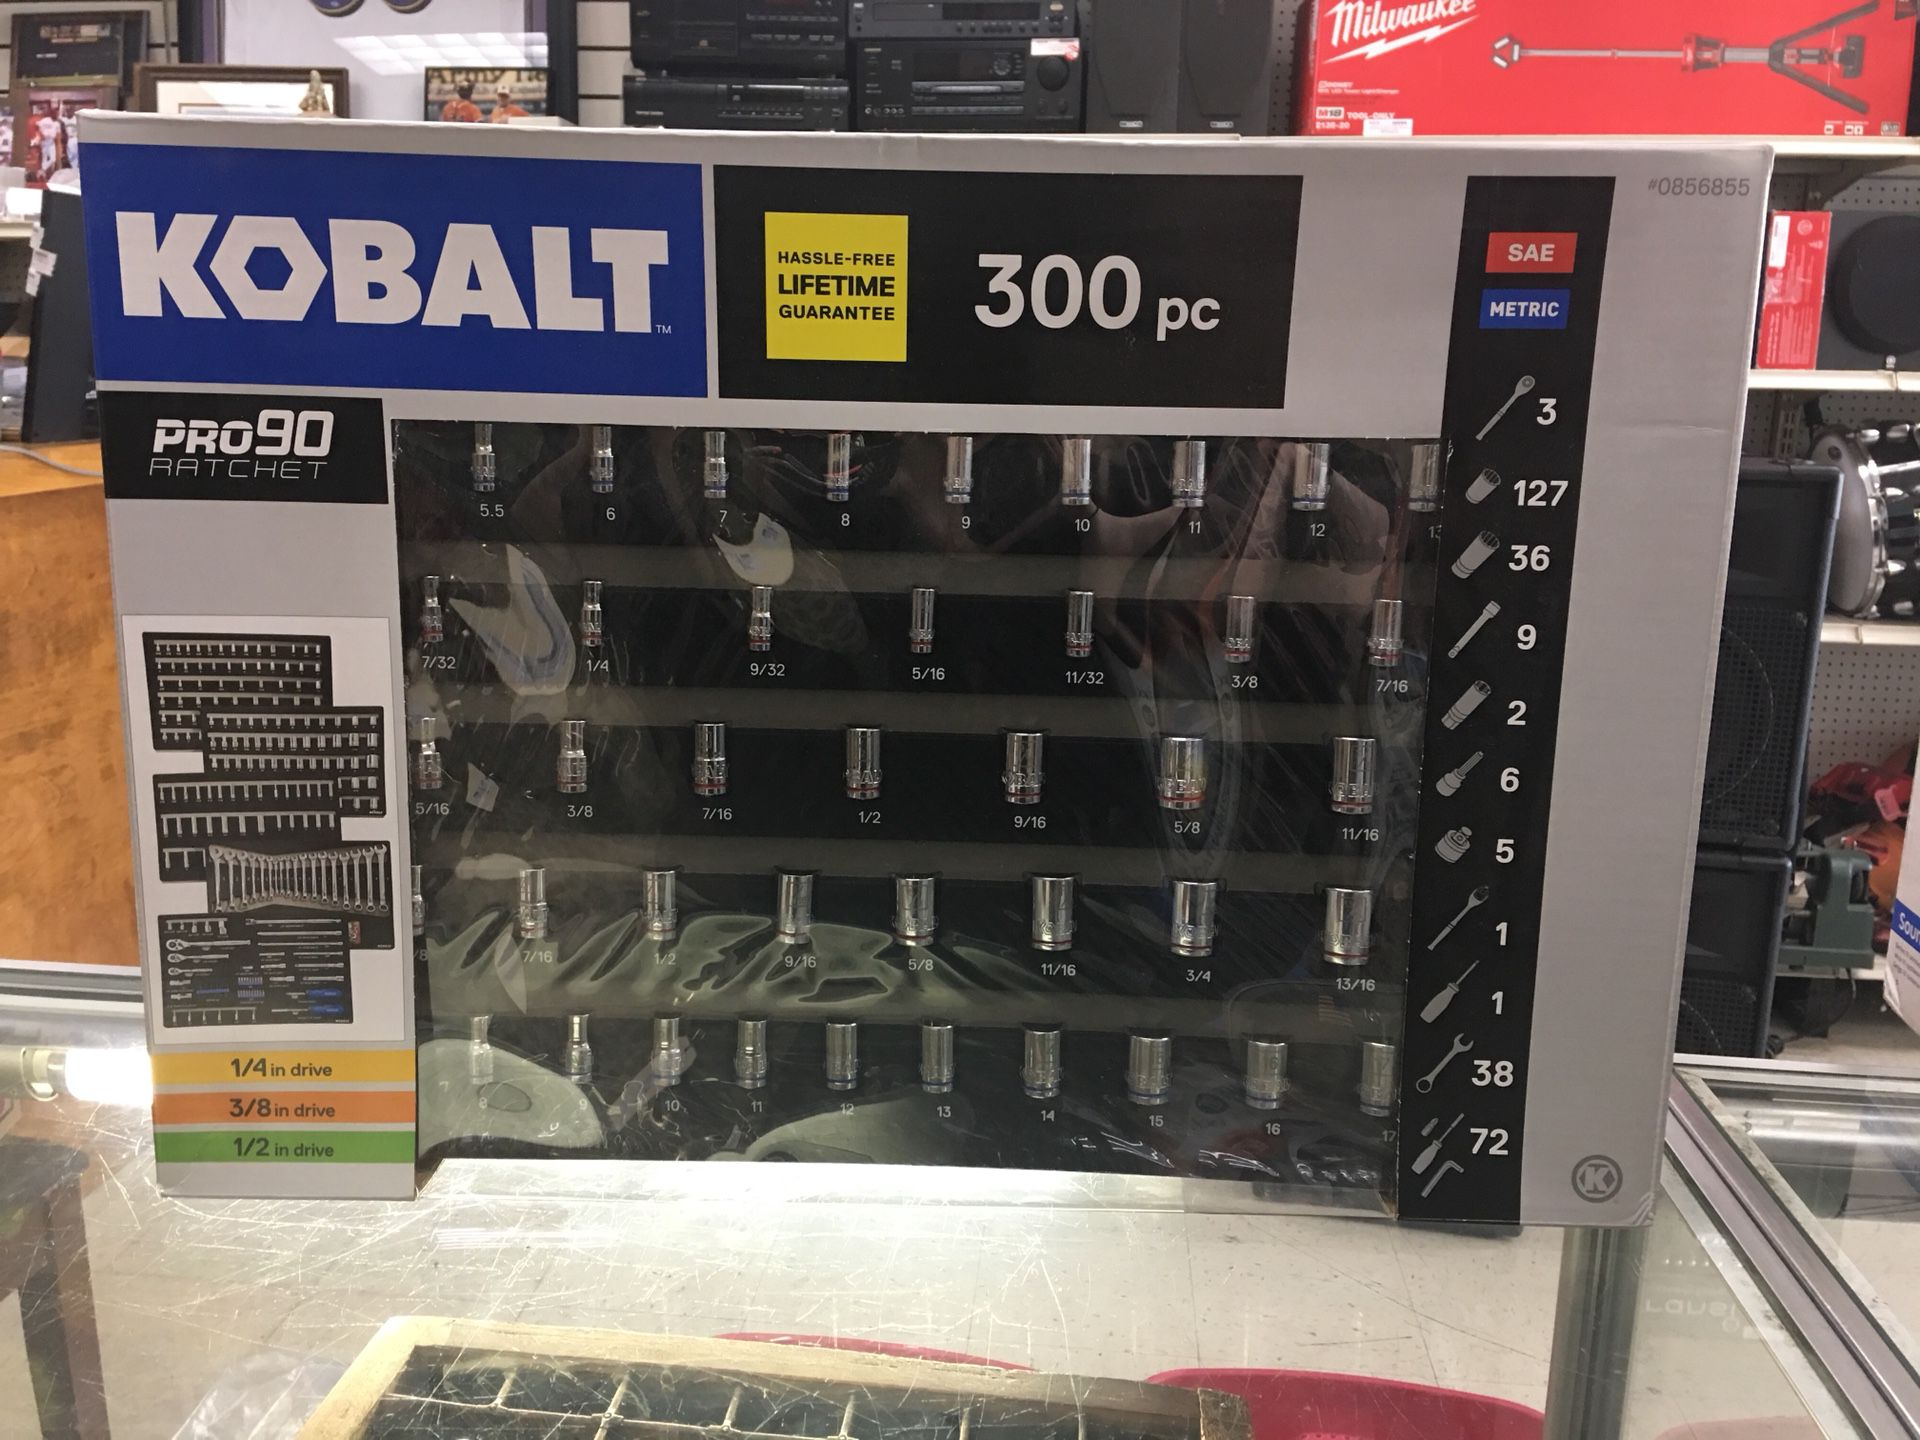 Brand new Kobalt 300 piece Pro90 Ratchet set